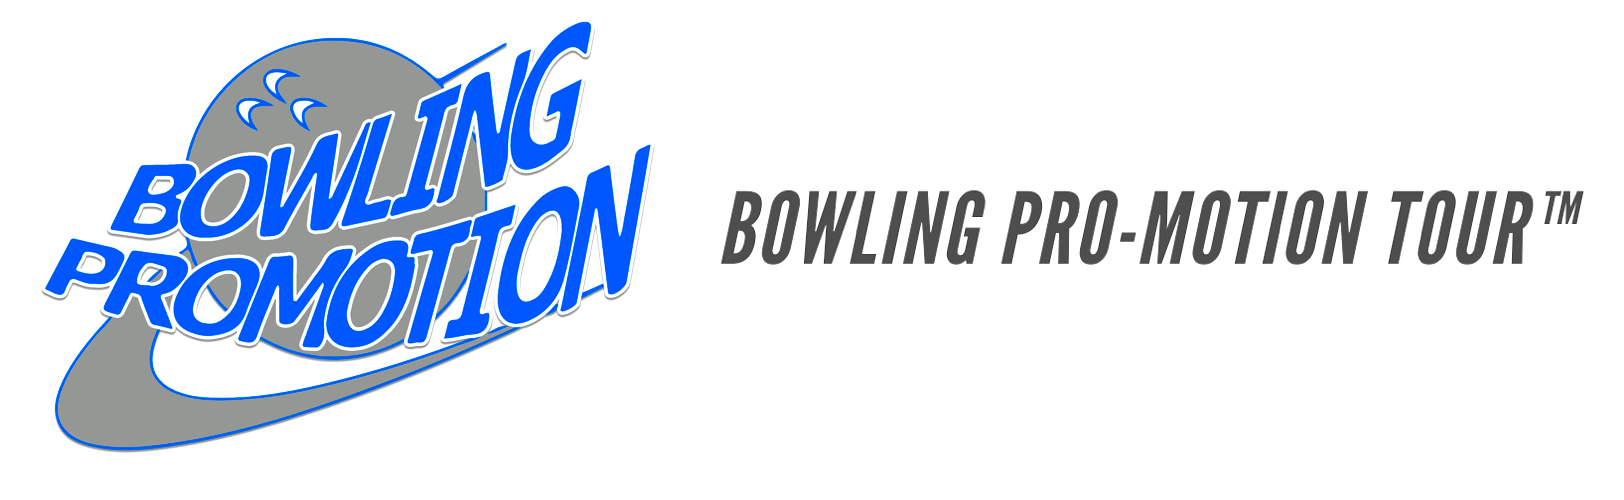 Bowling Pro-Motion Tour™ - Official Website